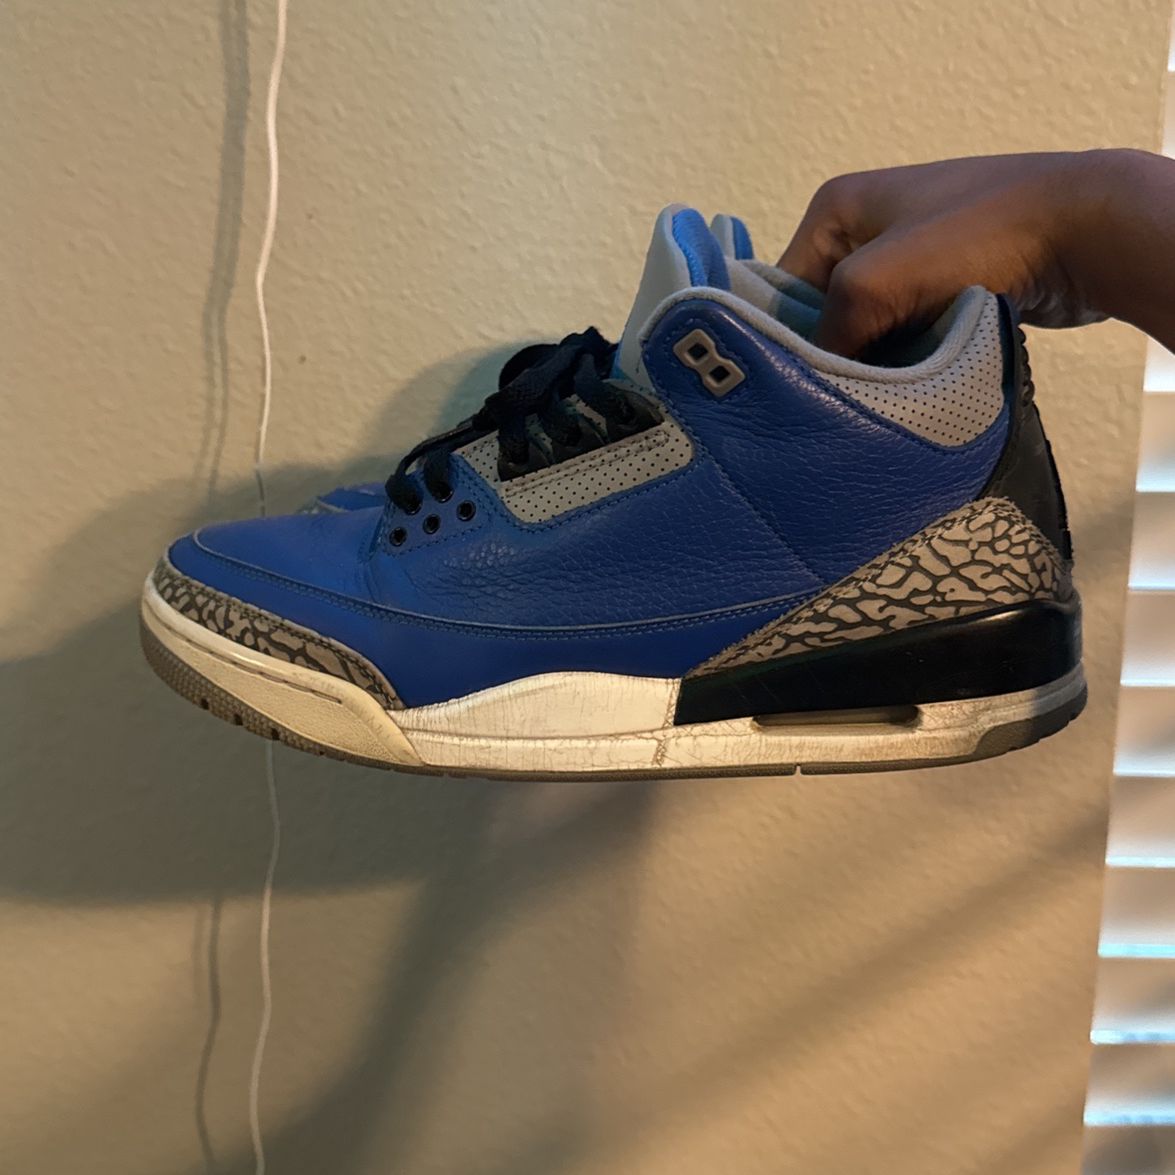 Royal Blue Jordan 3s